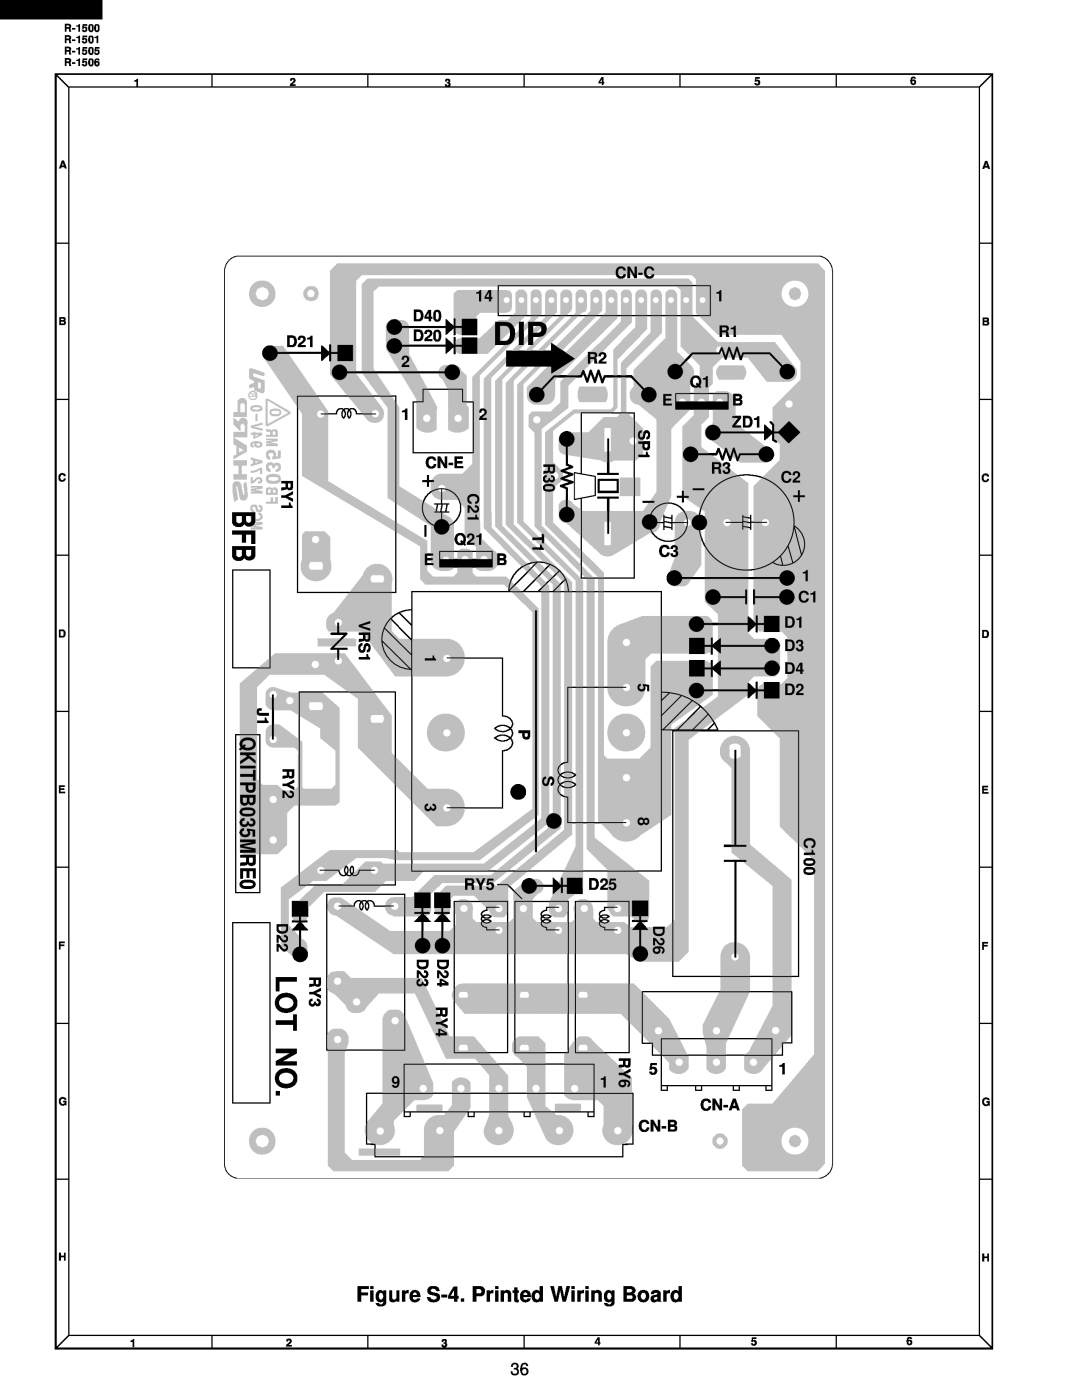 Sharp R-1501, R-1500, R-1505, R-1506 service manual Figure S-4. Printed Wiring Board, Cn-C, Cn-E, Cn-A, Cn-B 